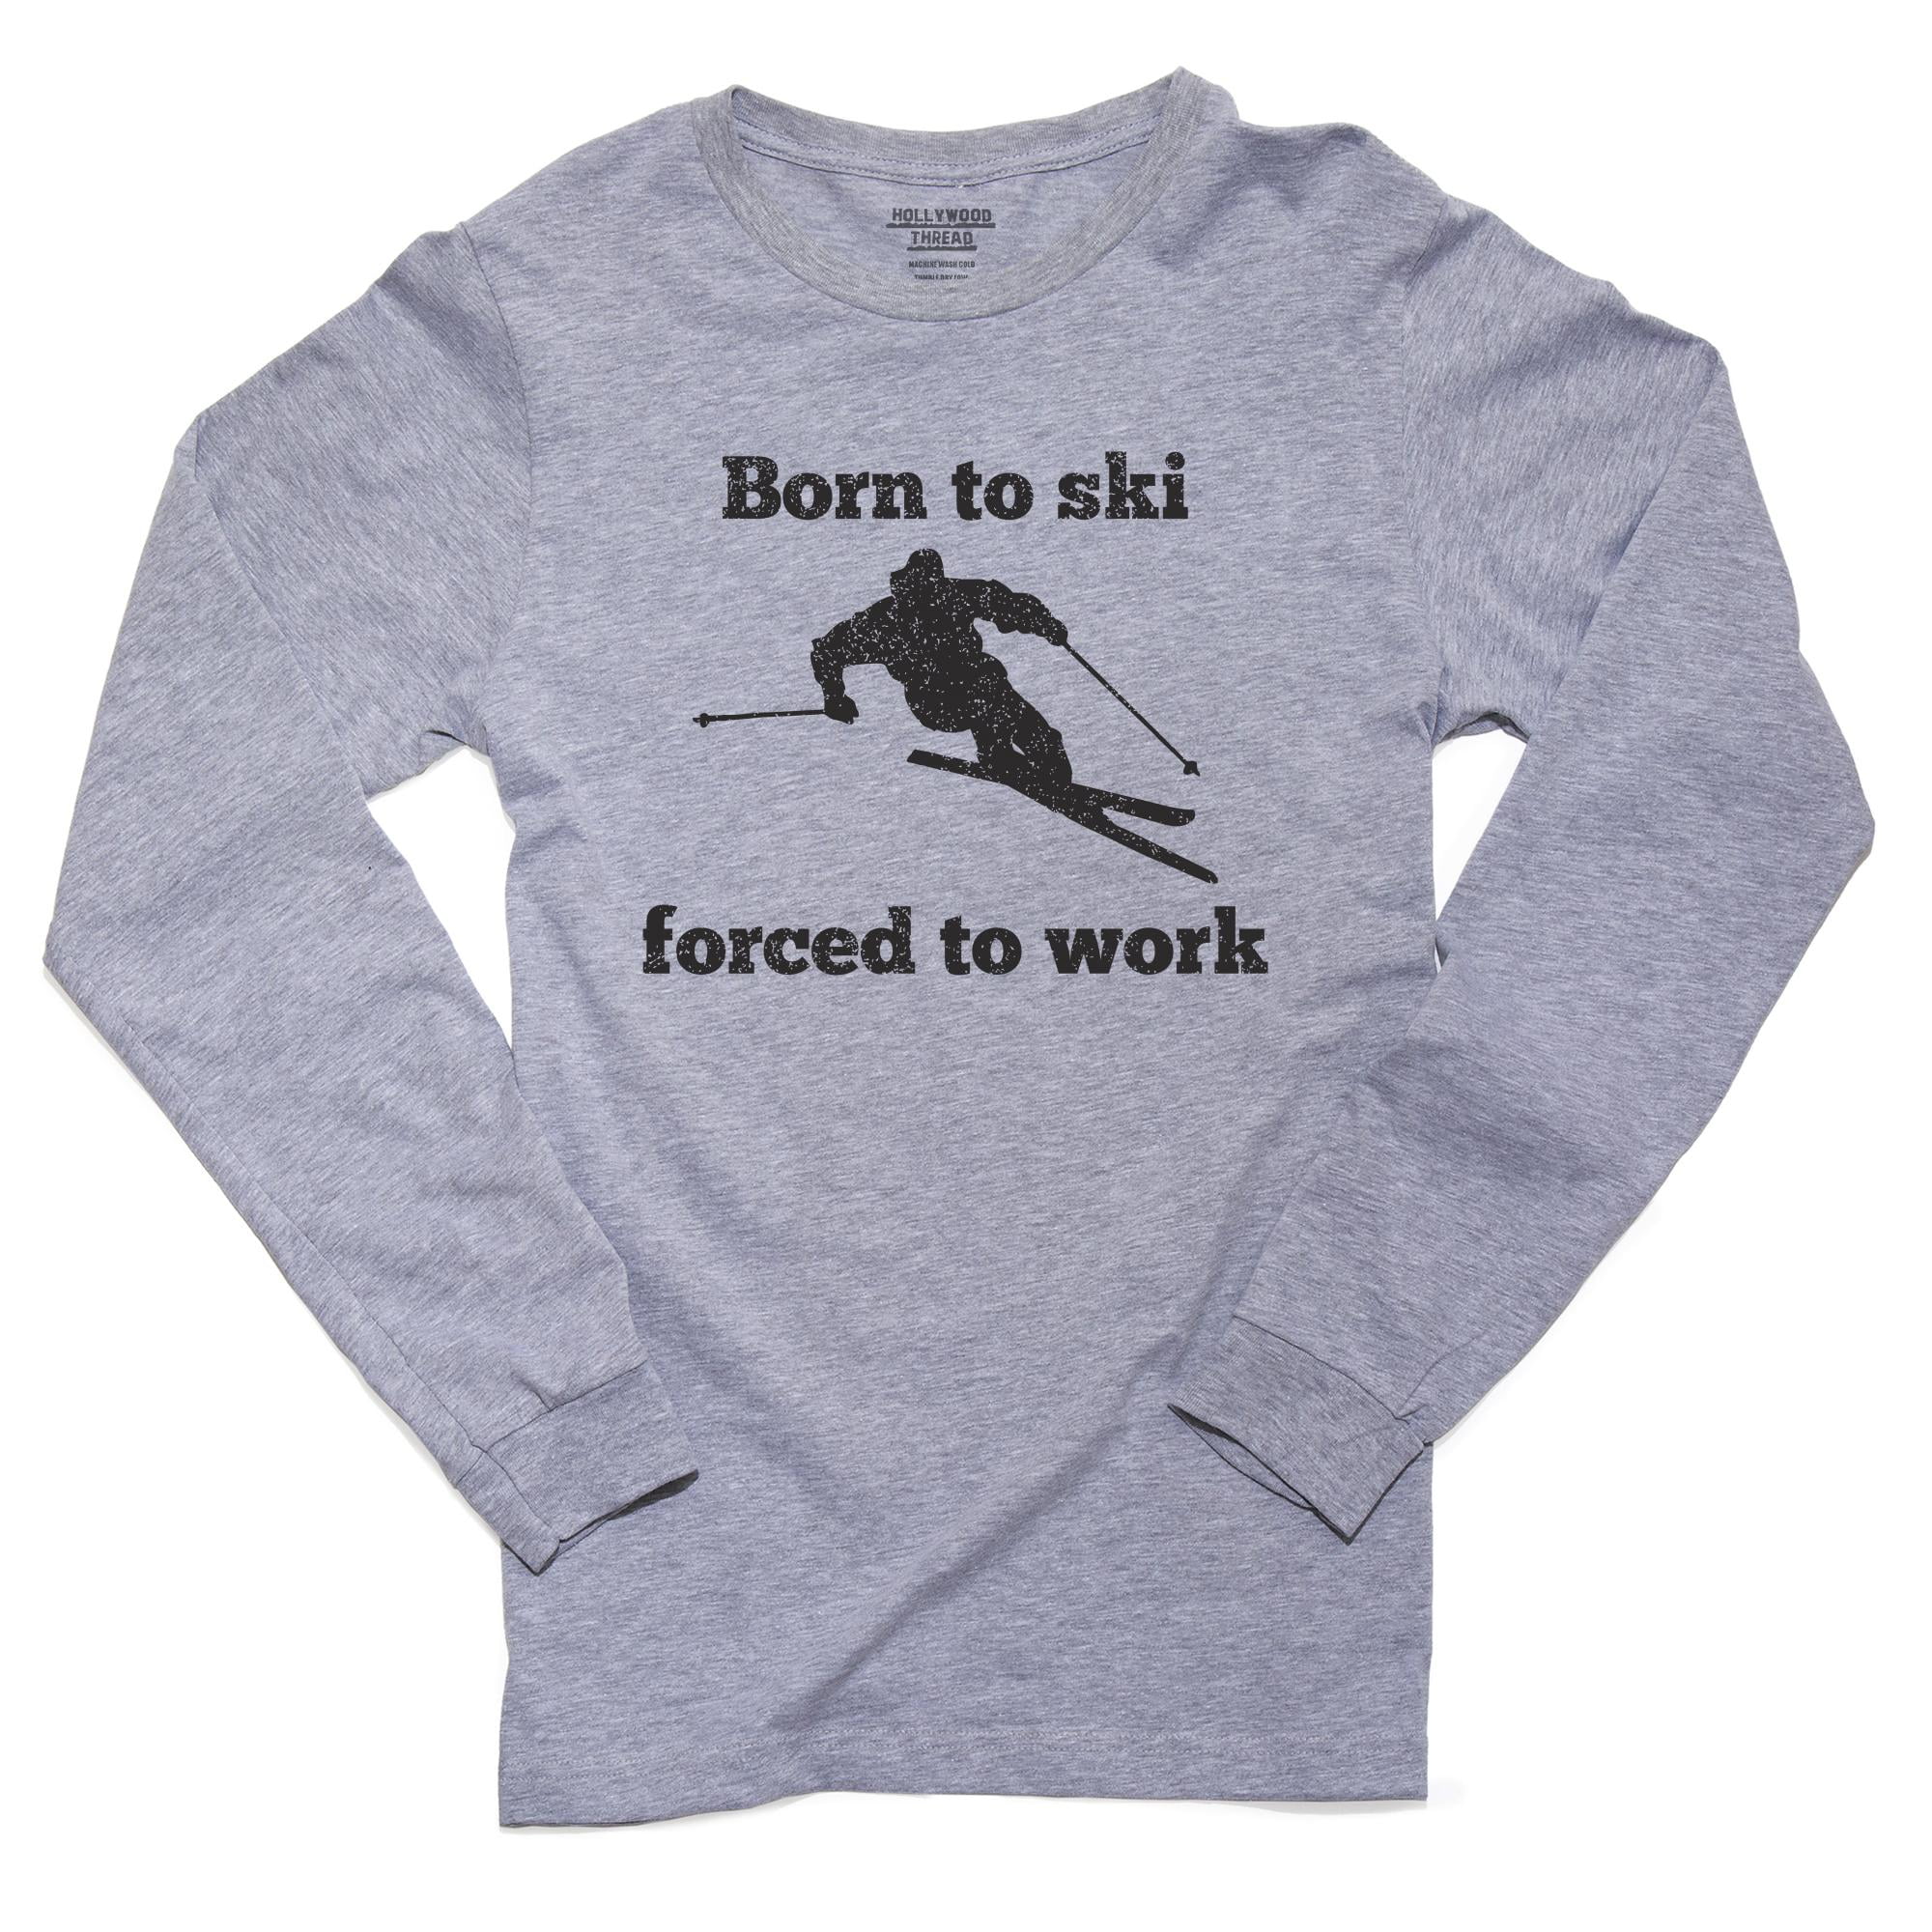 Born To Ski t-shirt